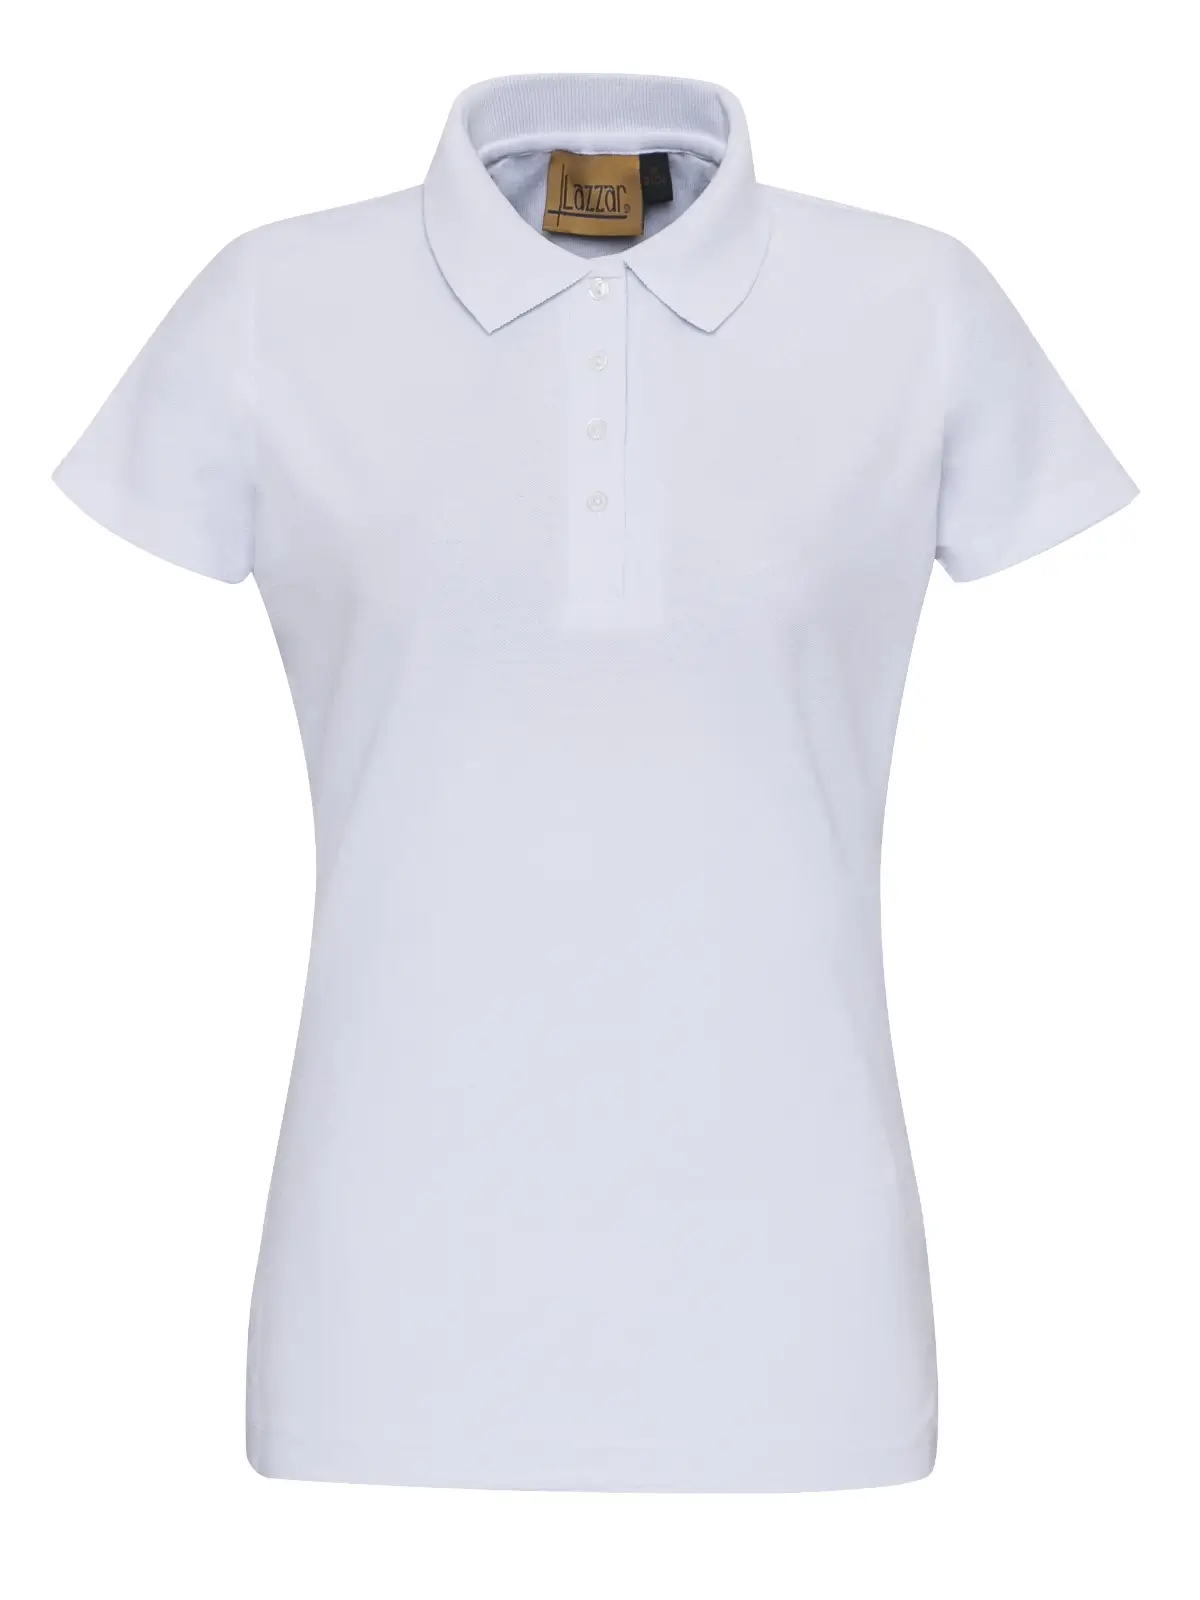 Womens pique polo white shirt 